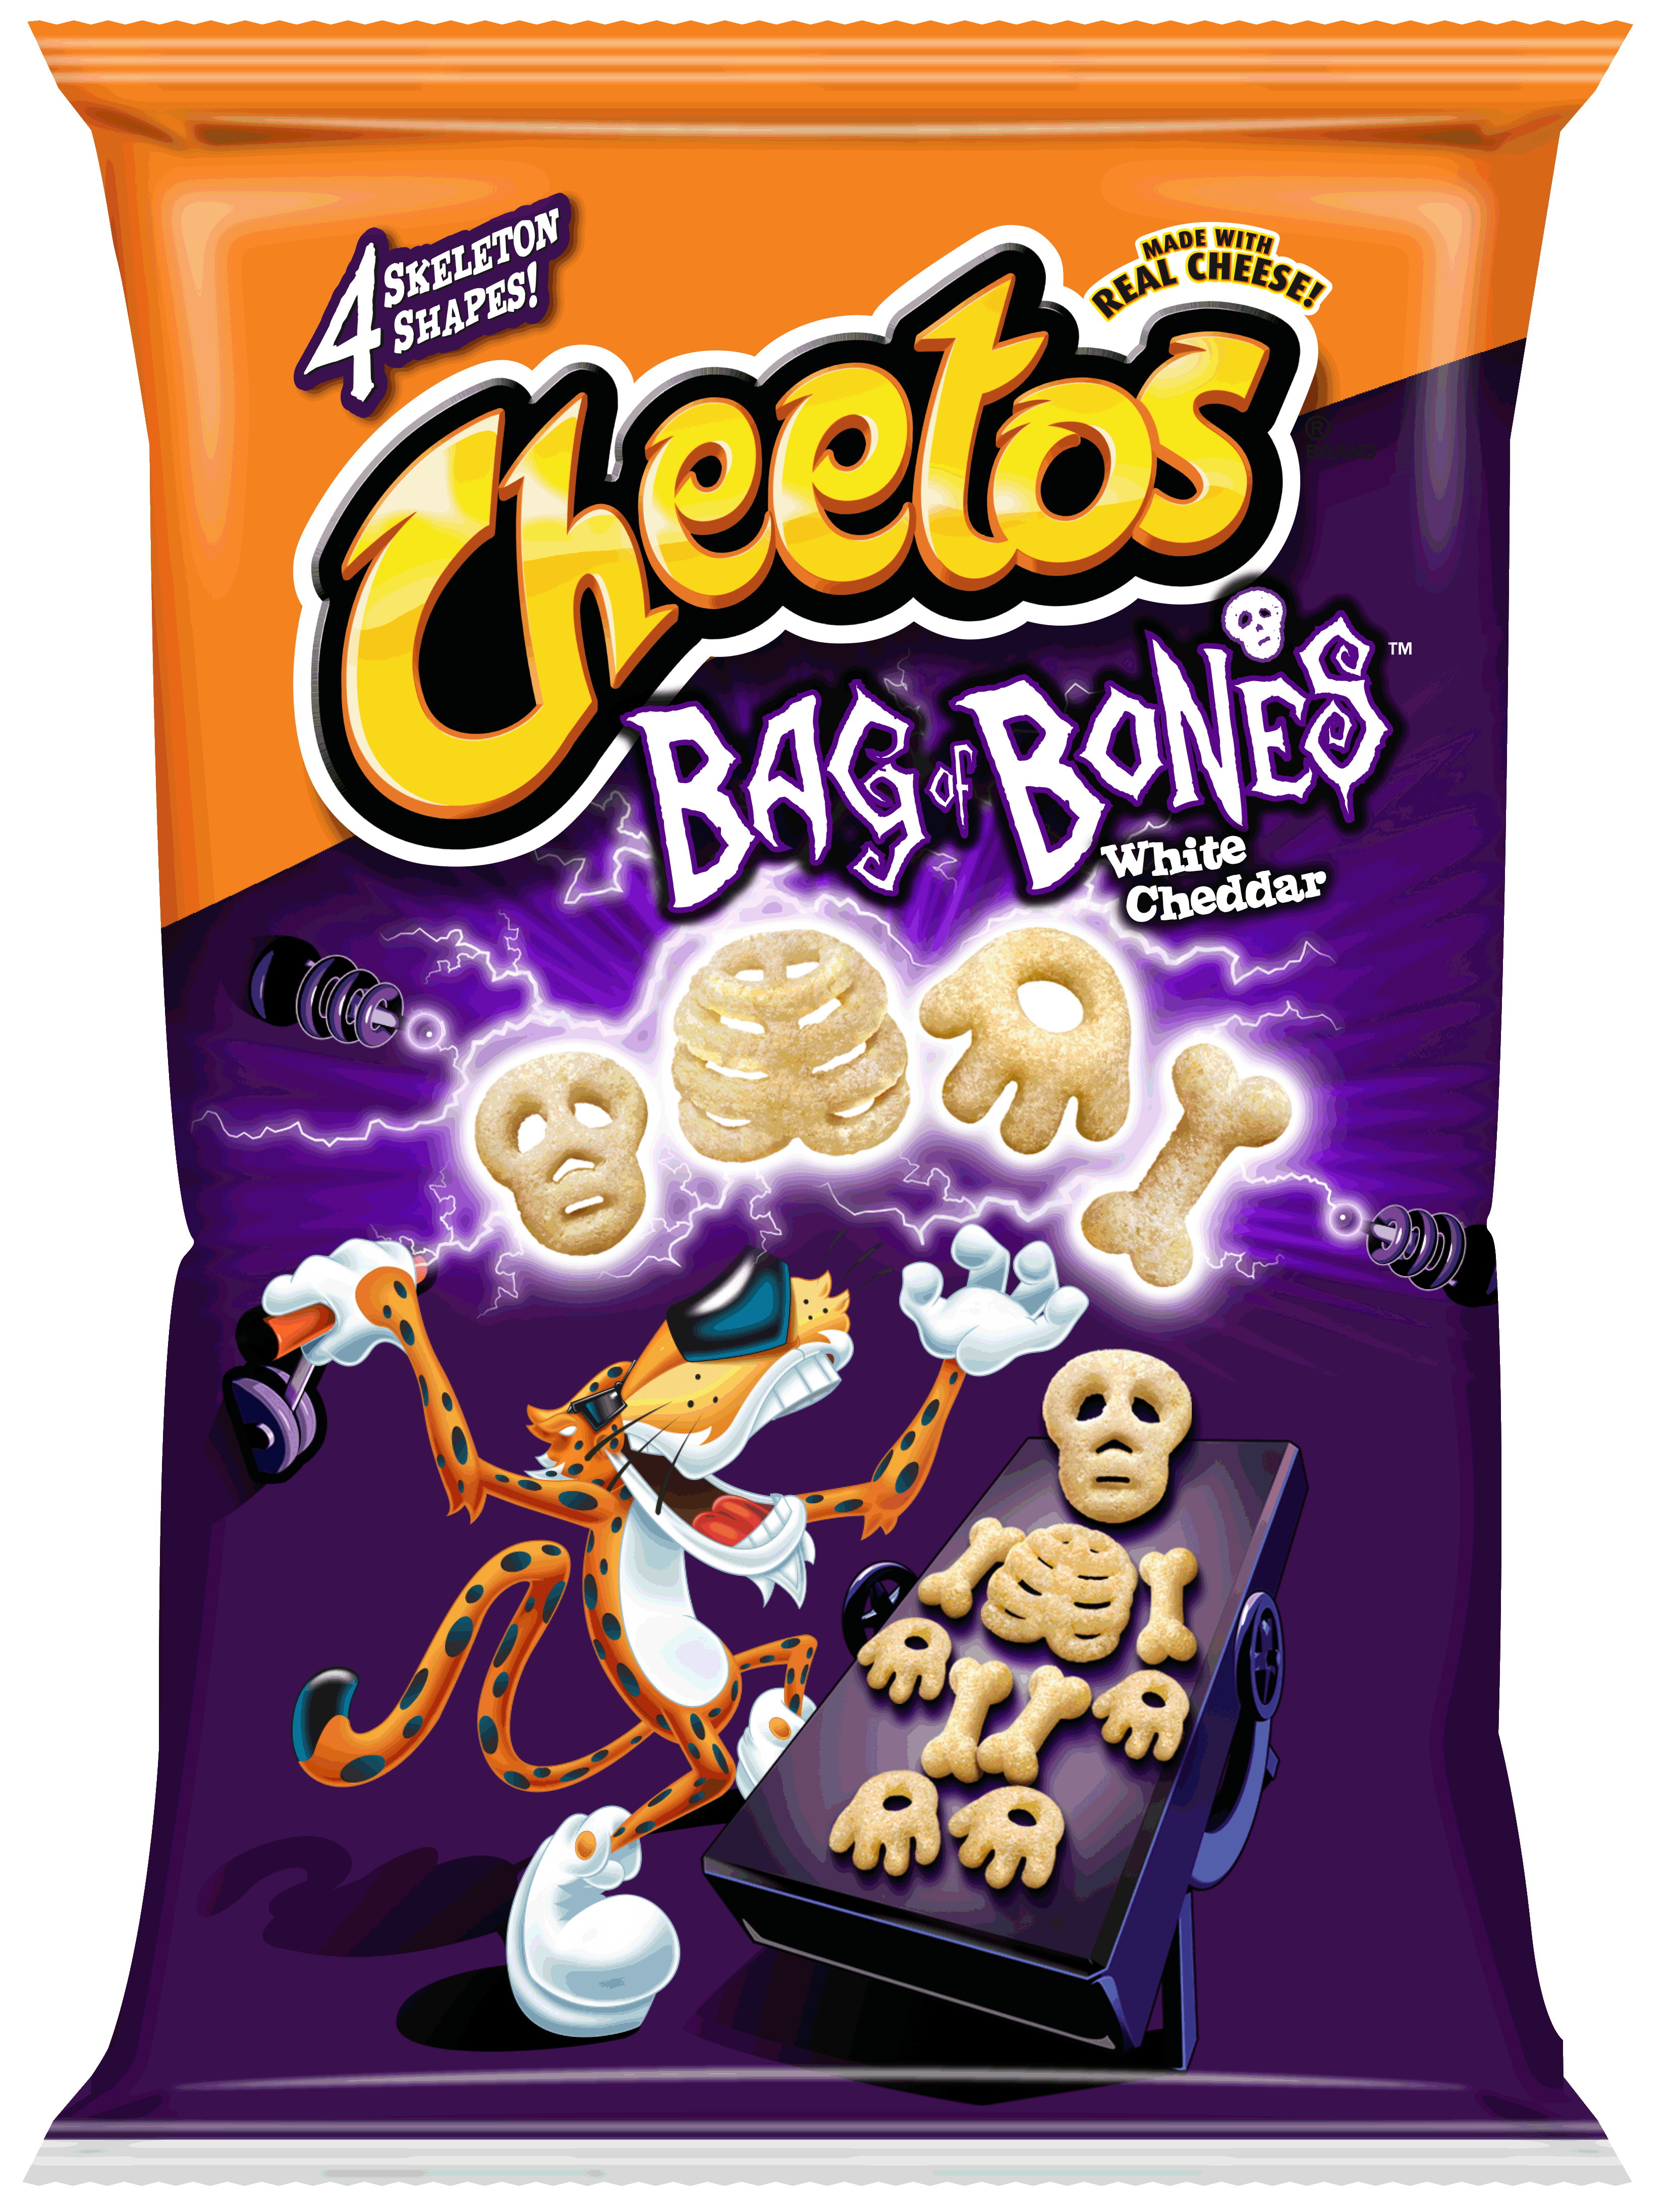 Cheetos-Bag-of-Bones_Final